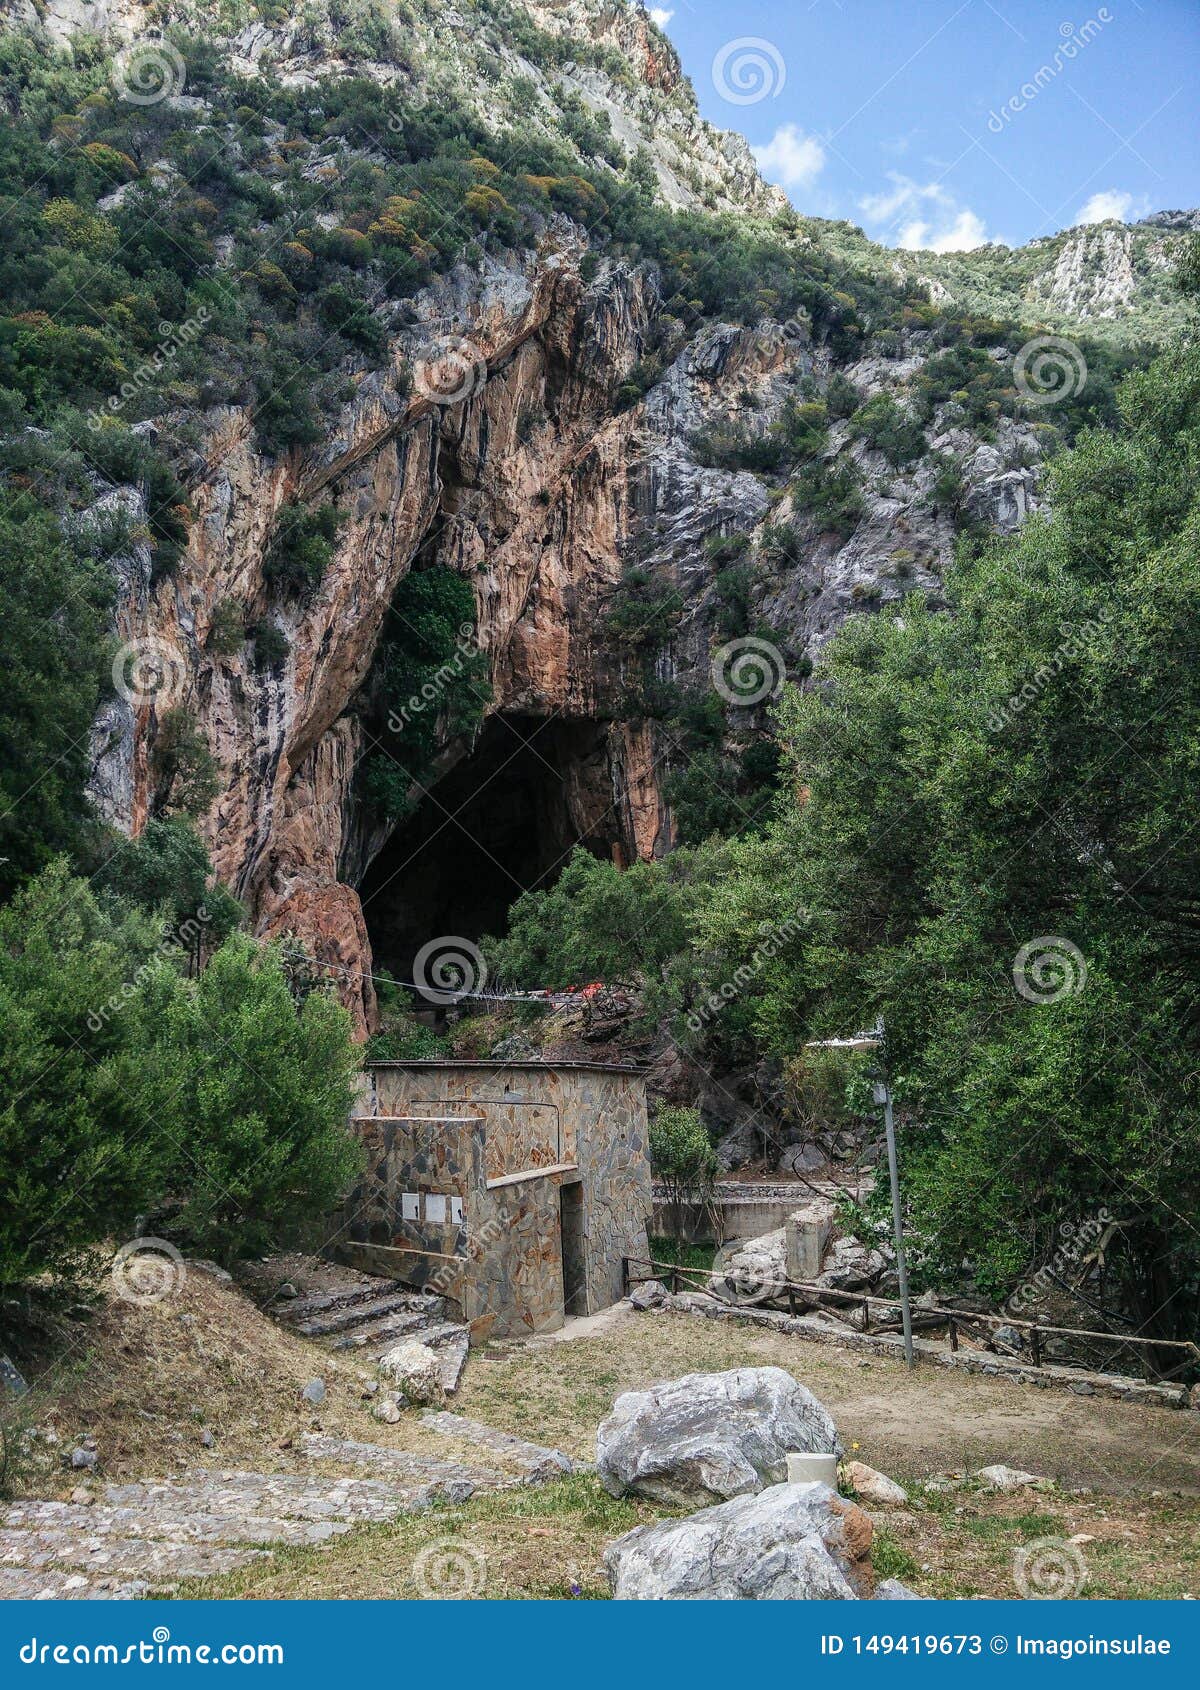 Sardinia. Natural Monuments. Caves of San Giovanni, Domusnovas in Iglesiente Region. Entrance Stock Image - Image of iglesiente, millennium: 149419673